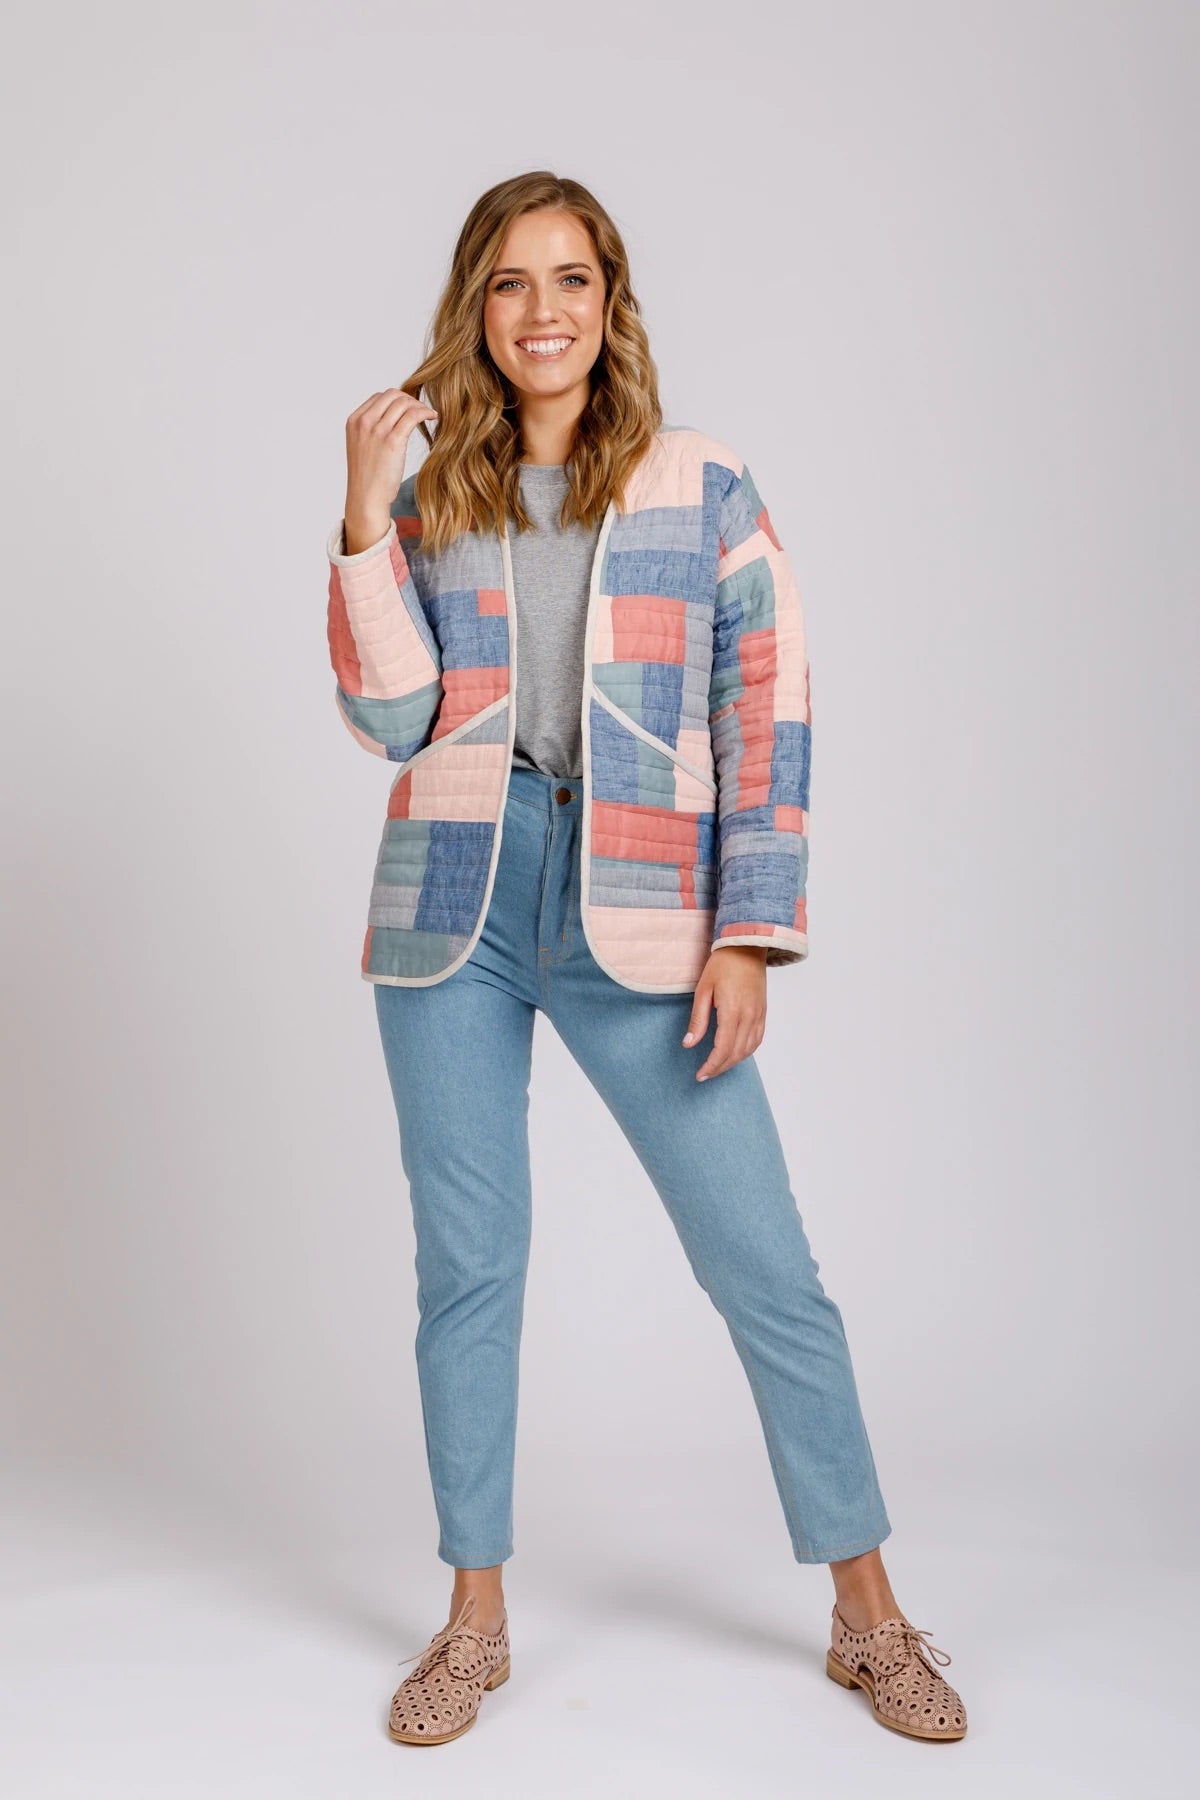 Megan Nielsen - Hovea Jacket & Coat Sewing Pattern